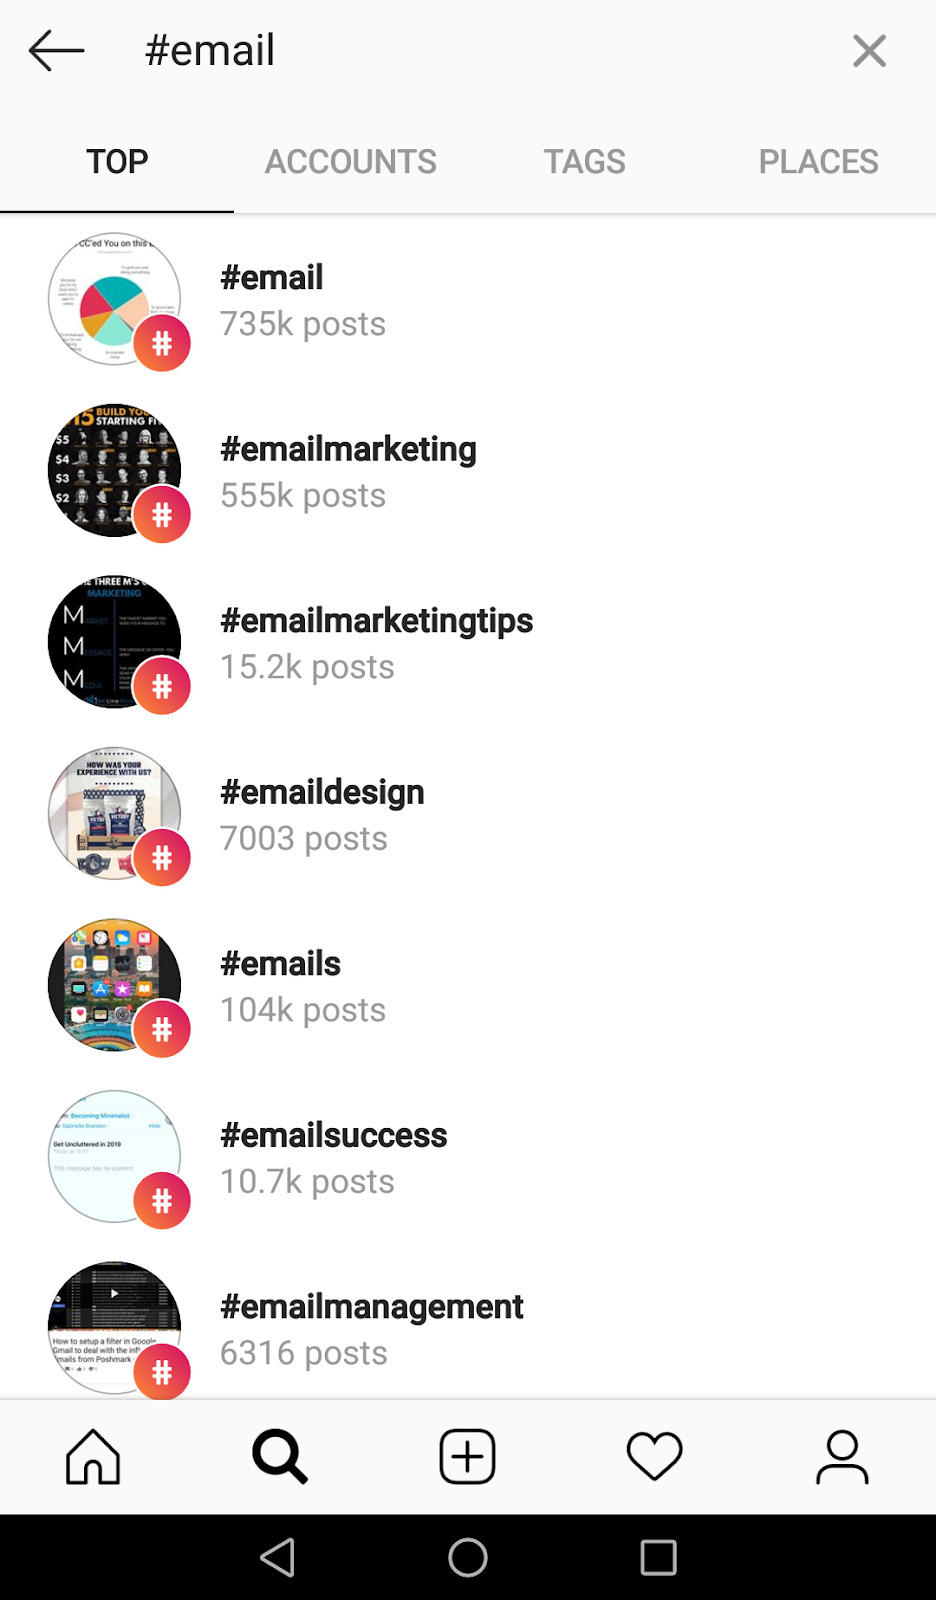 hashtagging social selling on instagram